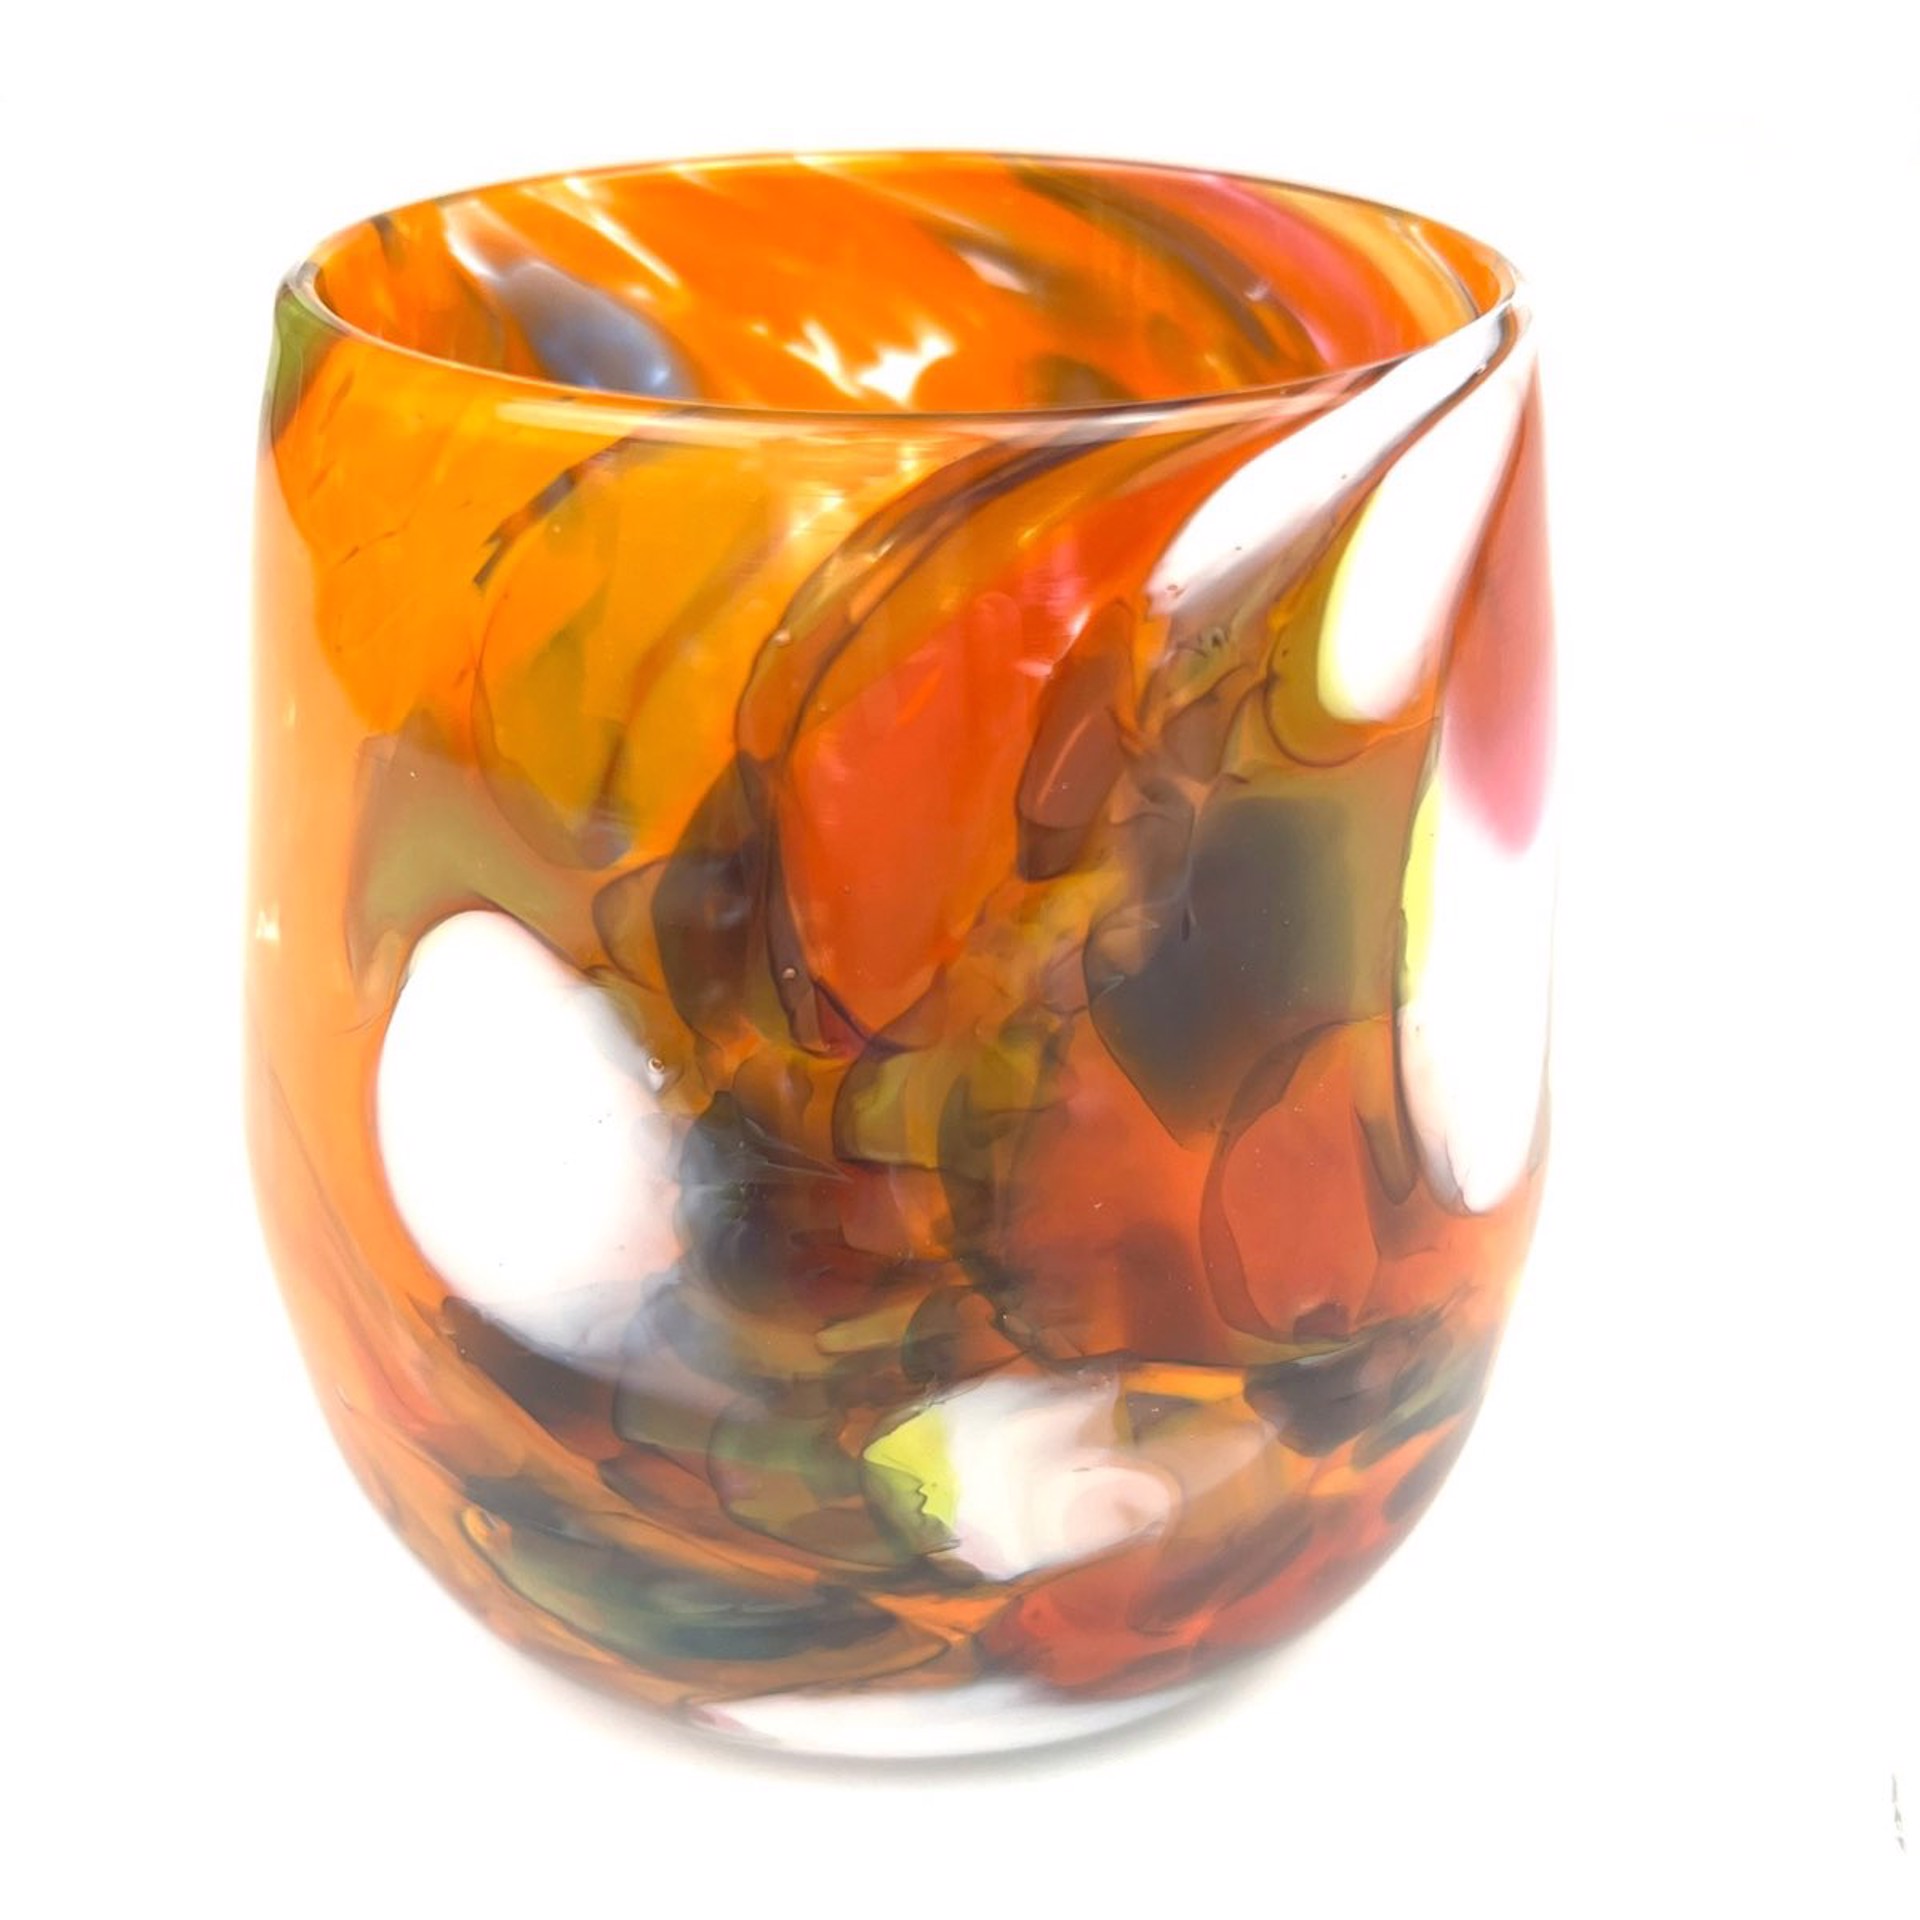 Orange Stemless Wine Glass by Chad Balster